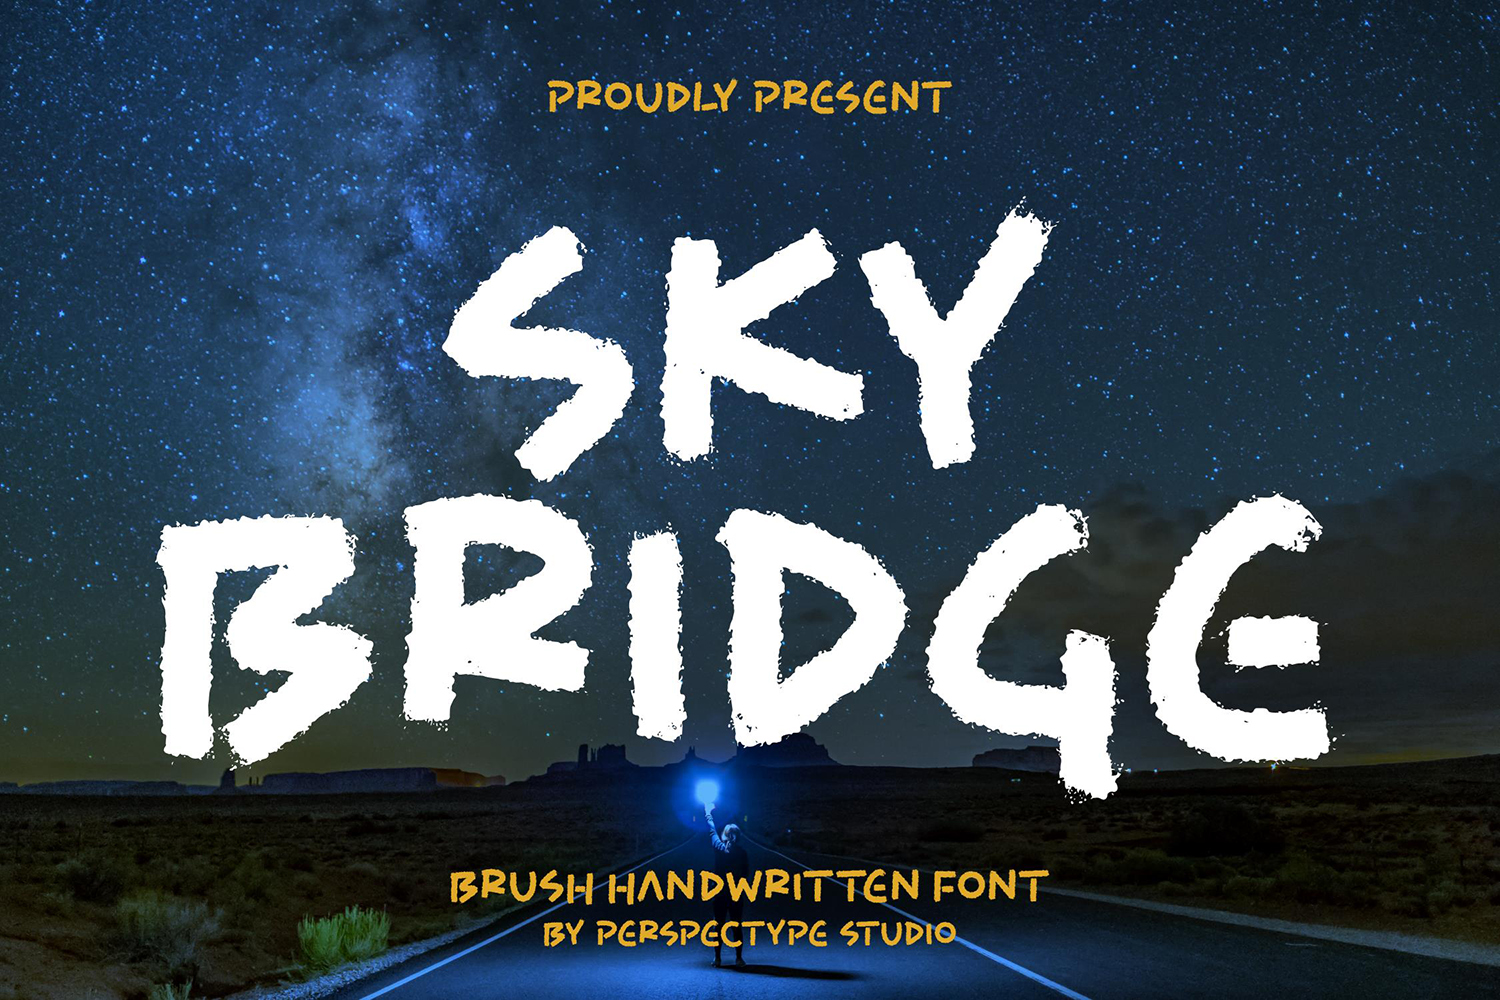 Sky Bridge Free Font